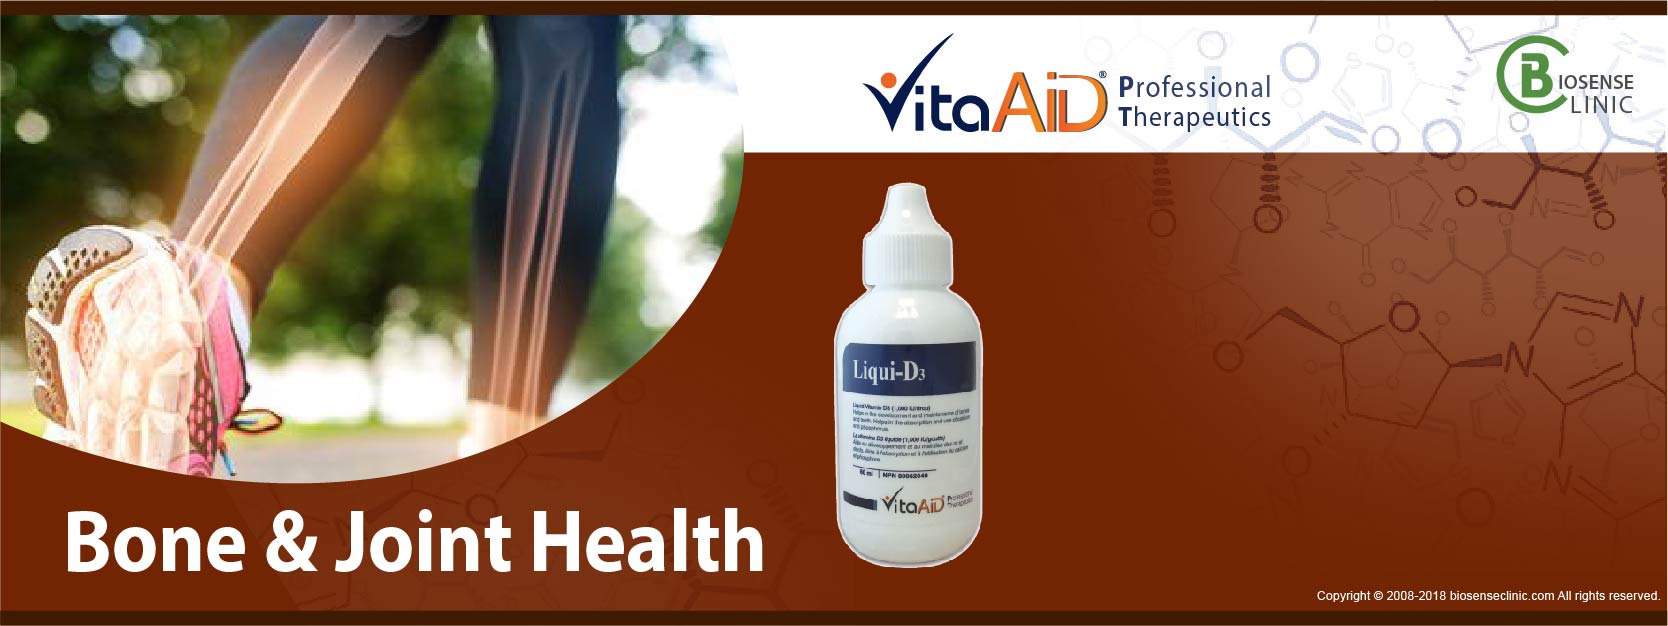 VitaAid category banner Bone & Joint Health